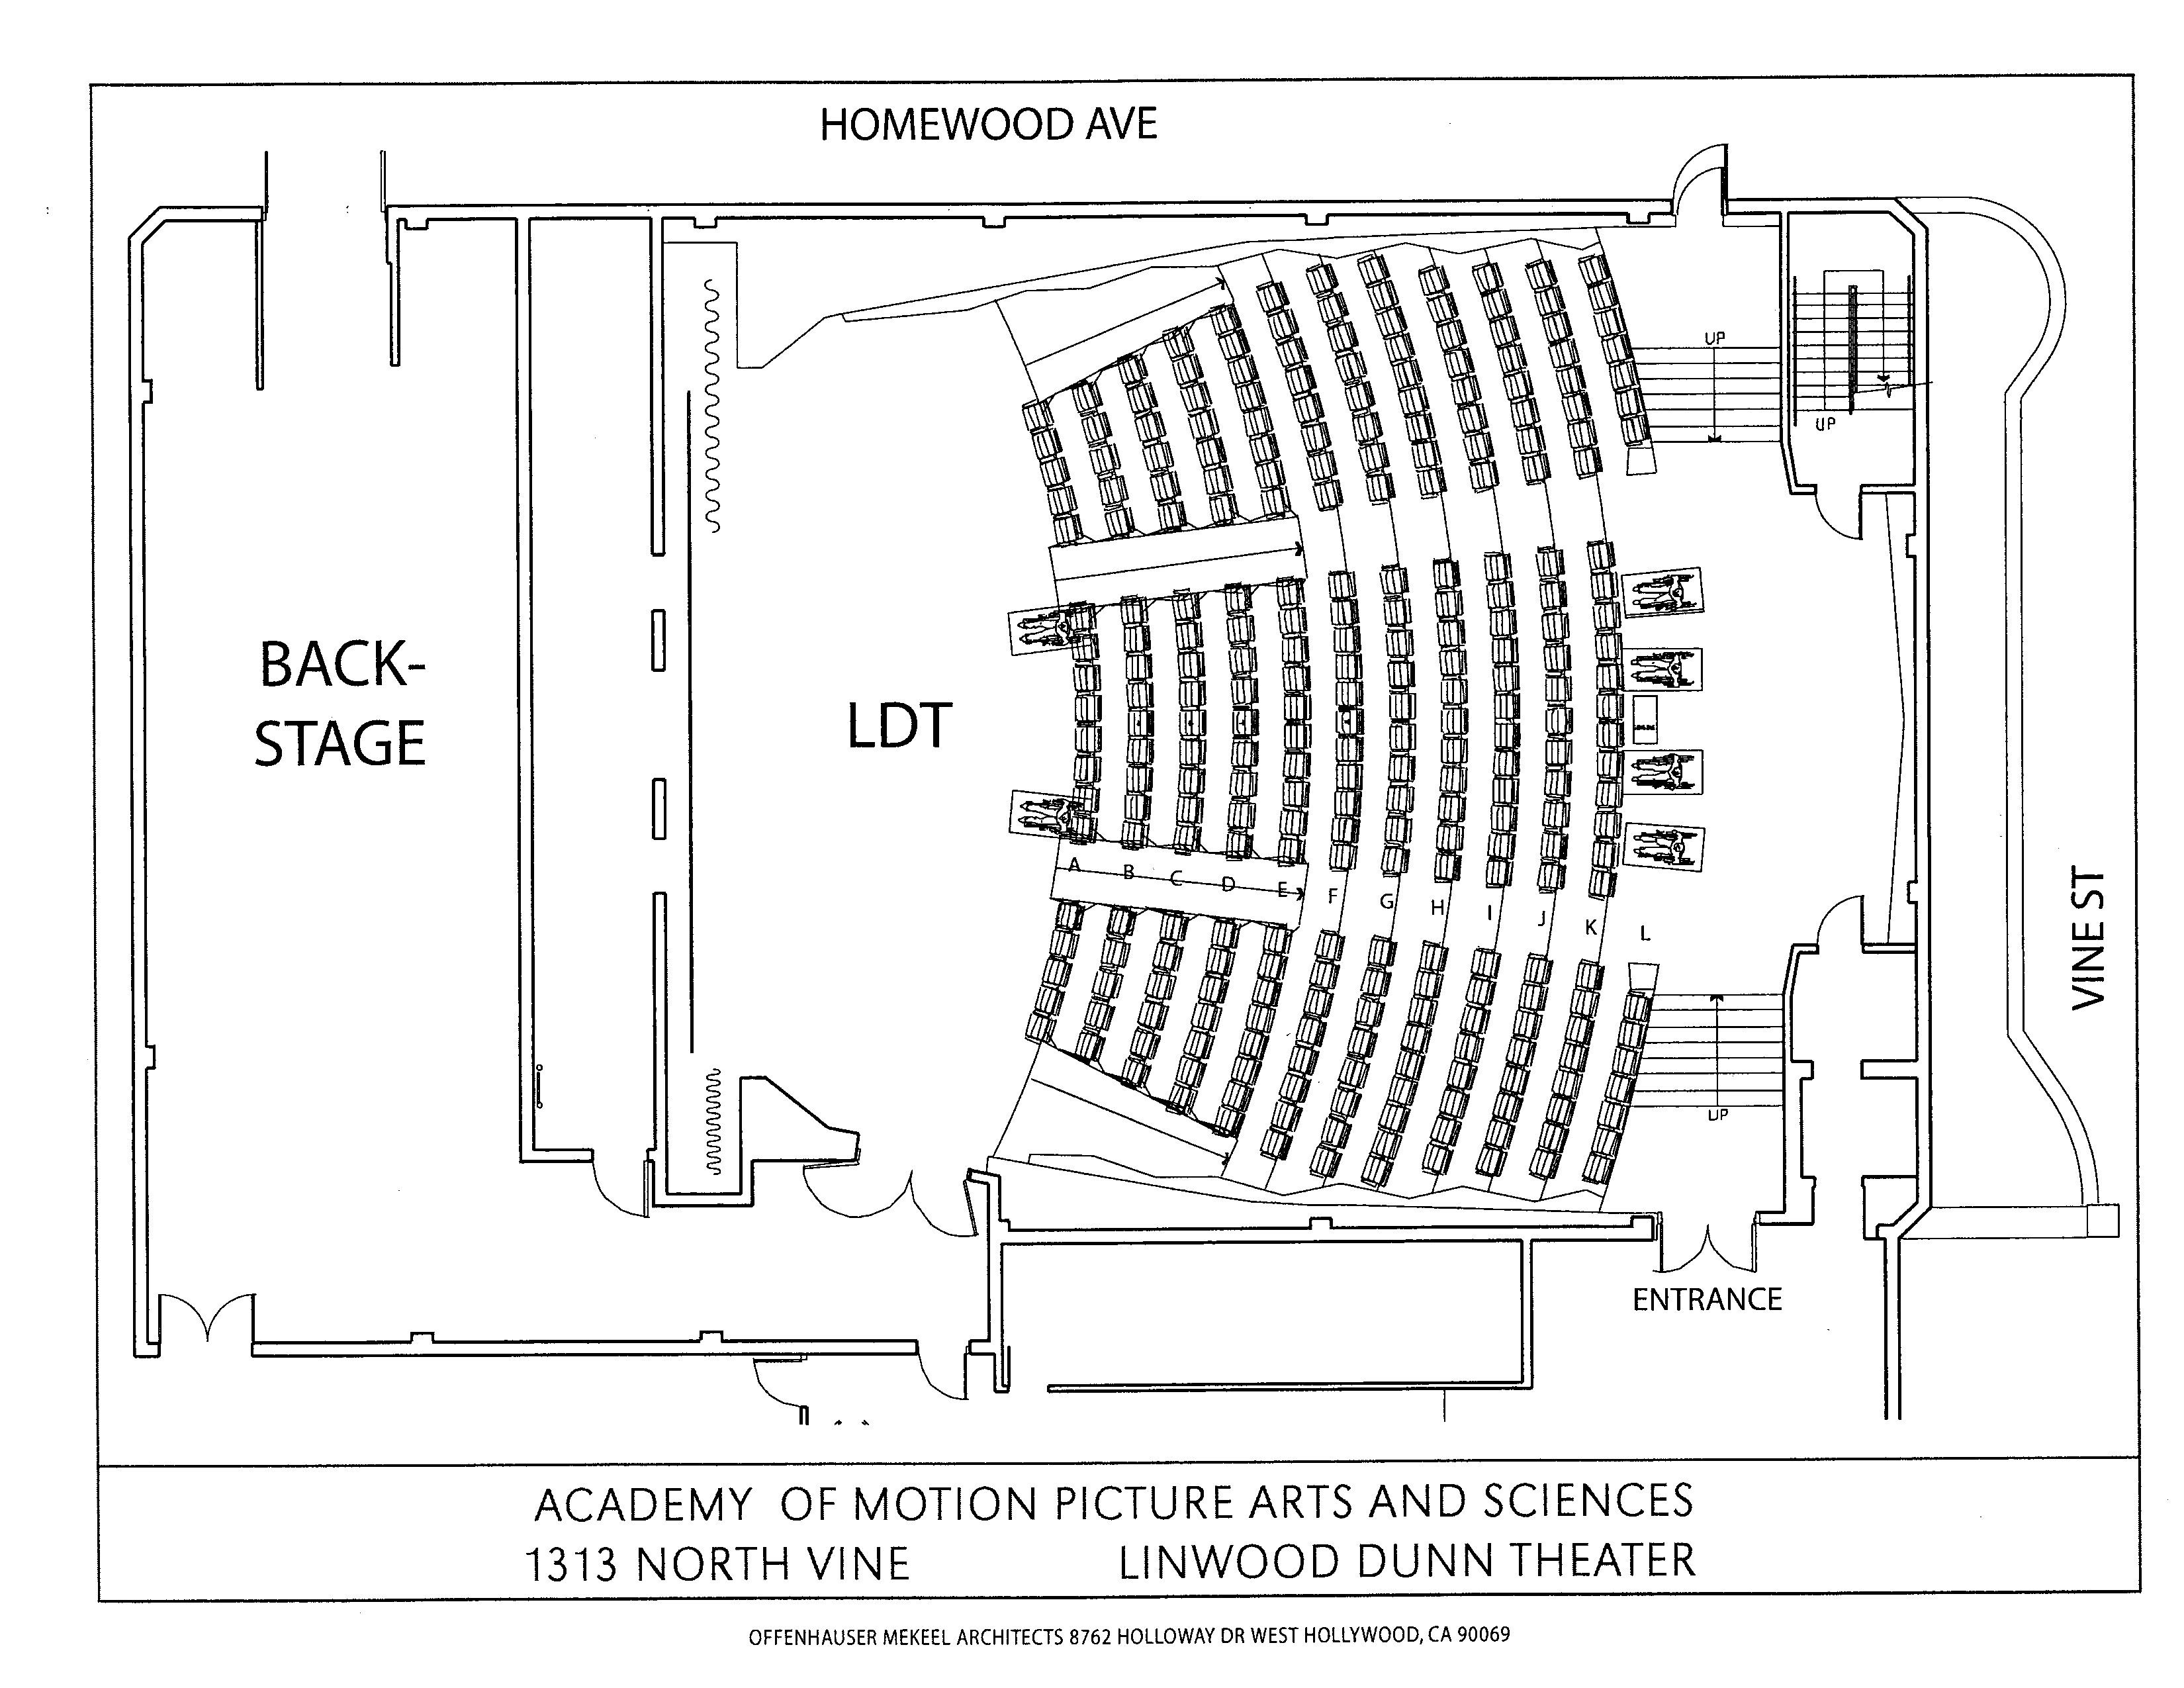 Linwood Dunn Theater floor plan